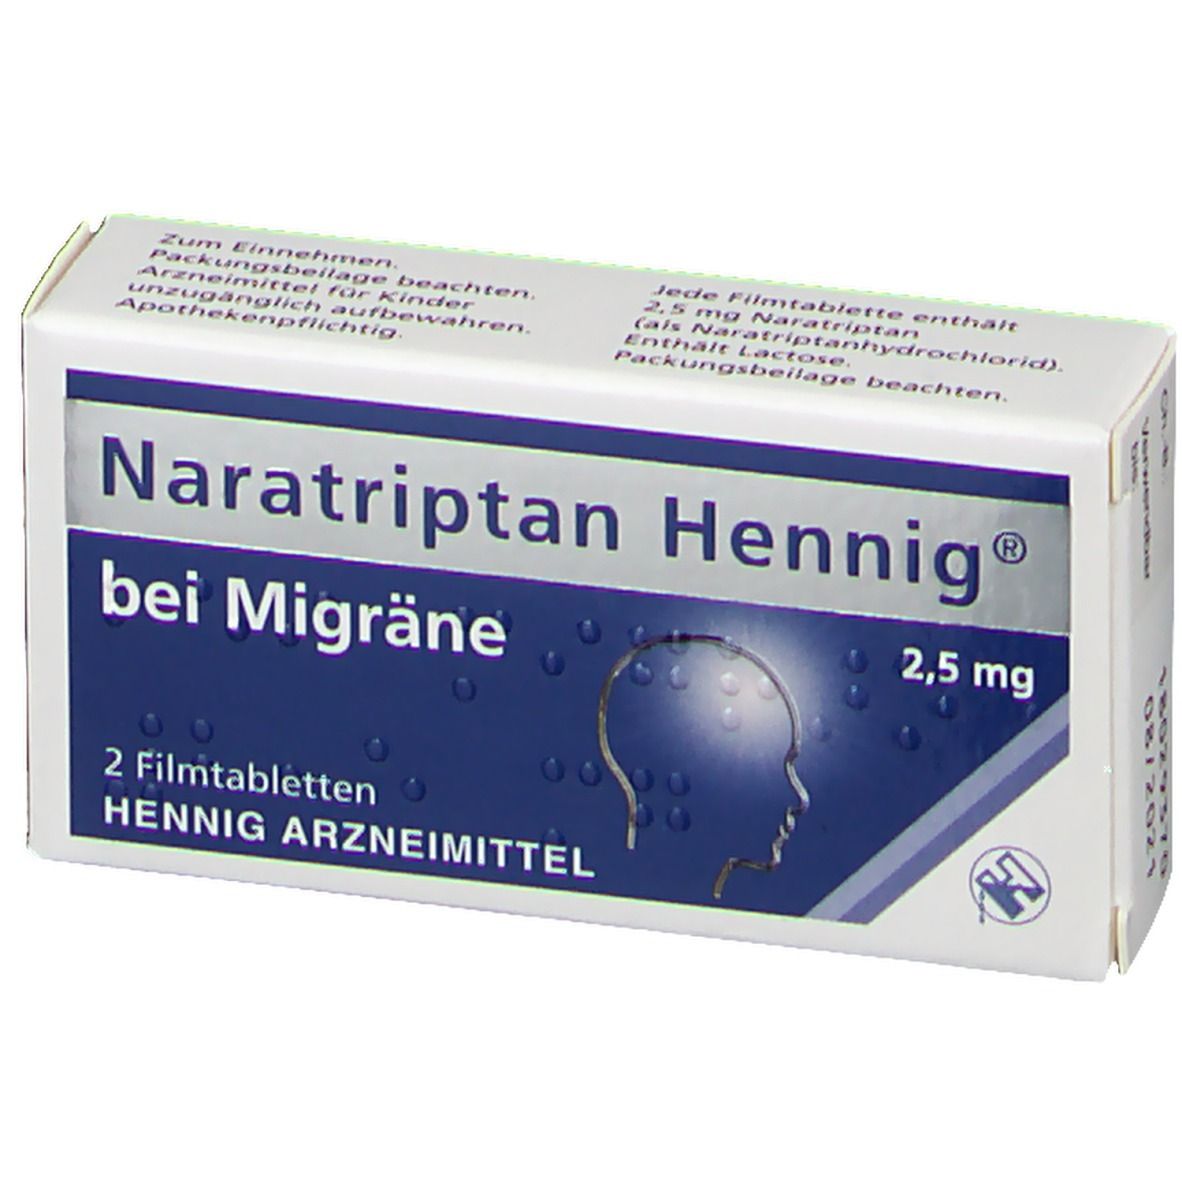 Naratriptan Hennig® 2,5mg bei Migräne